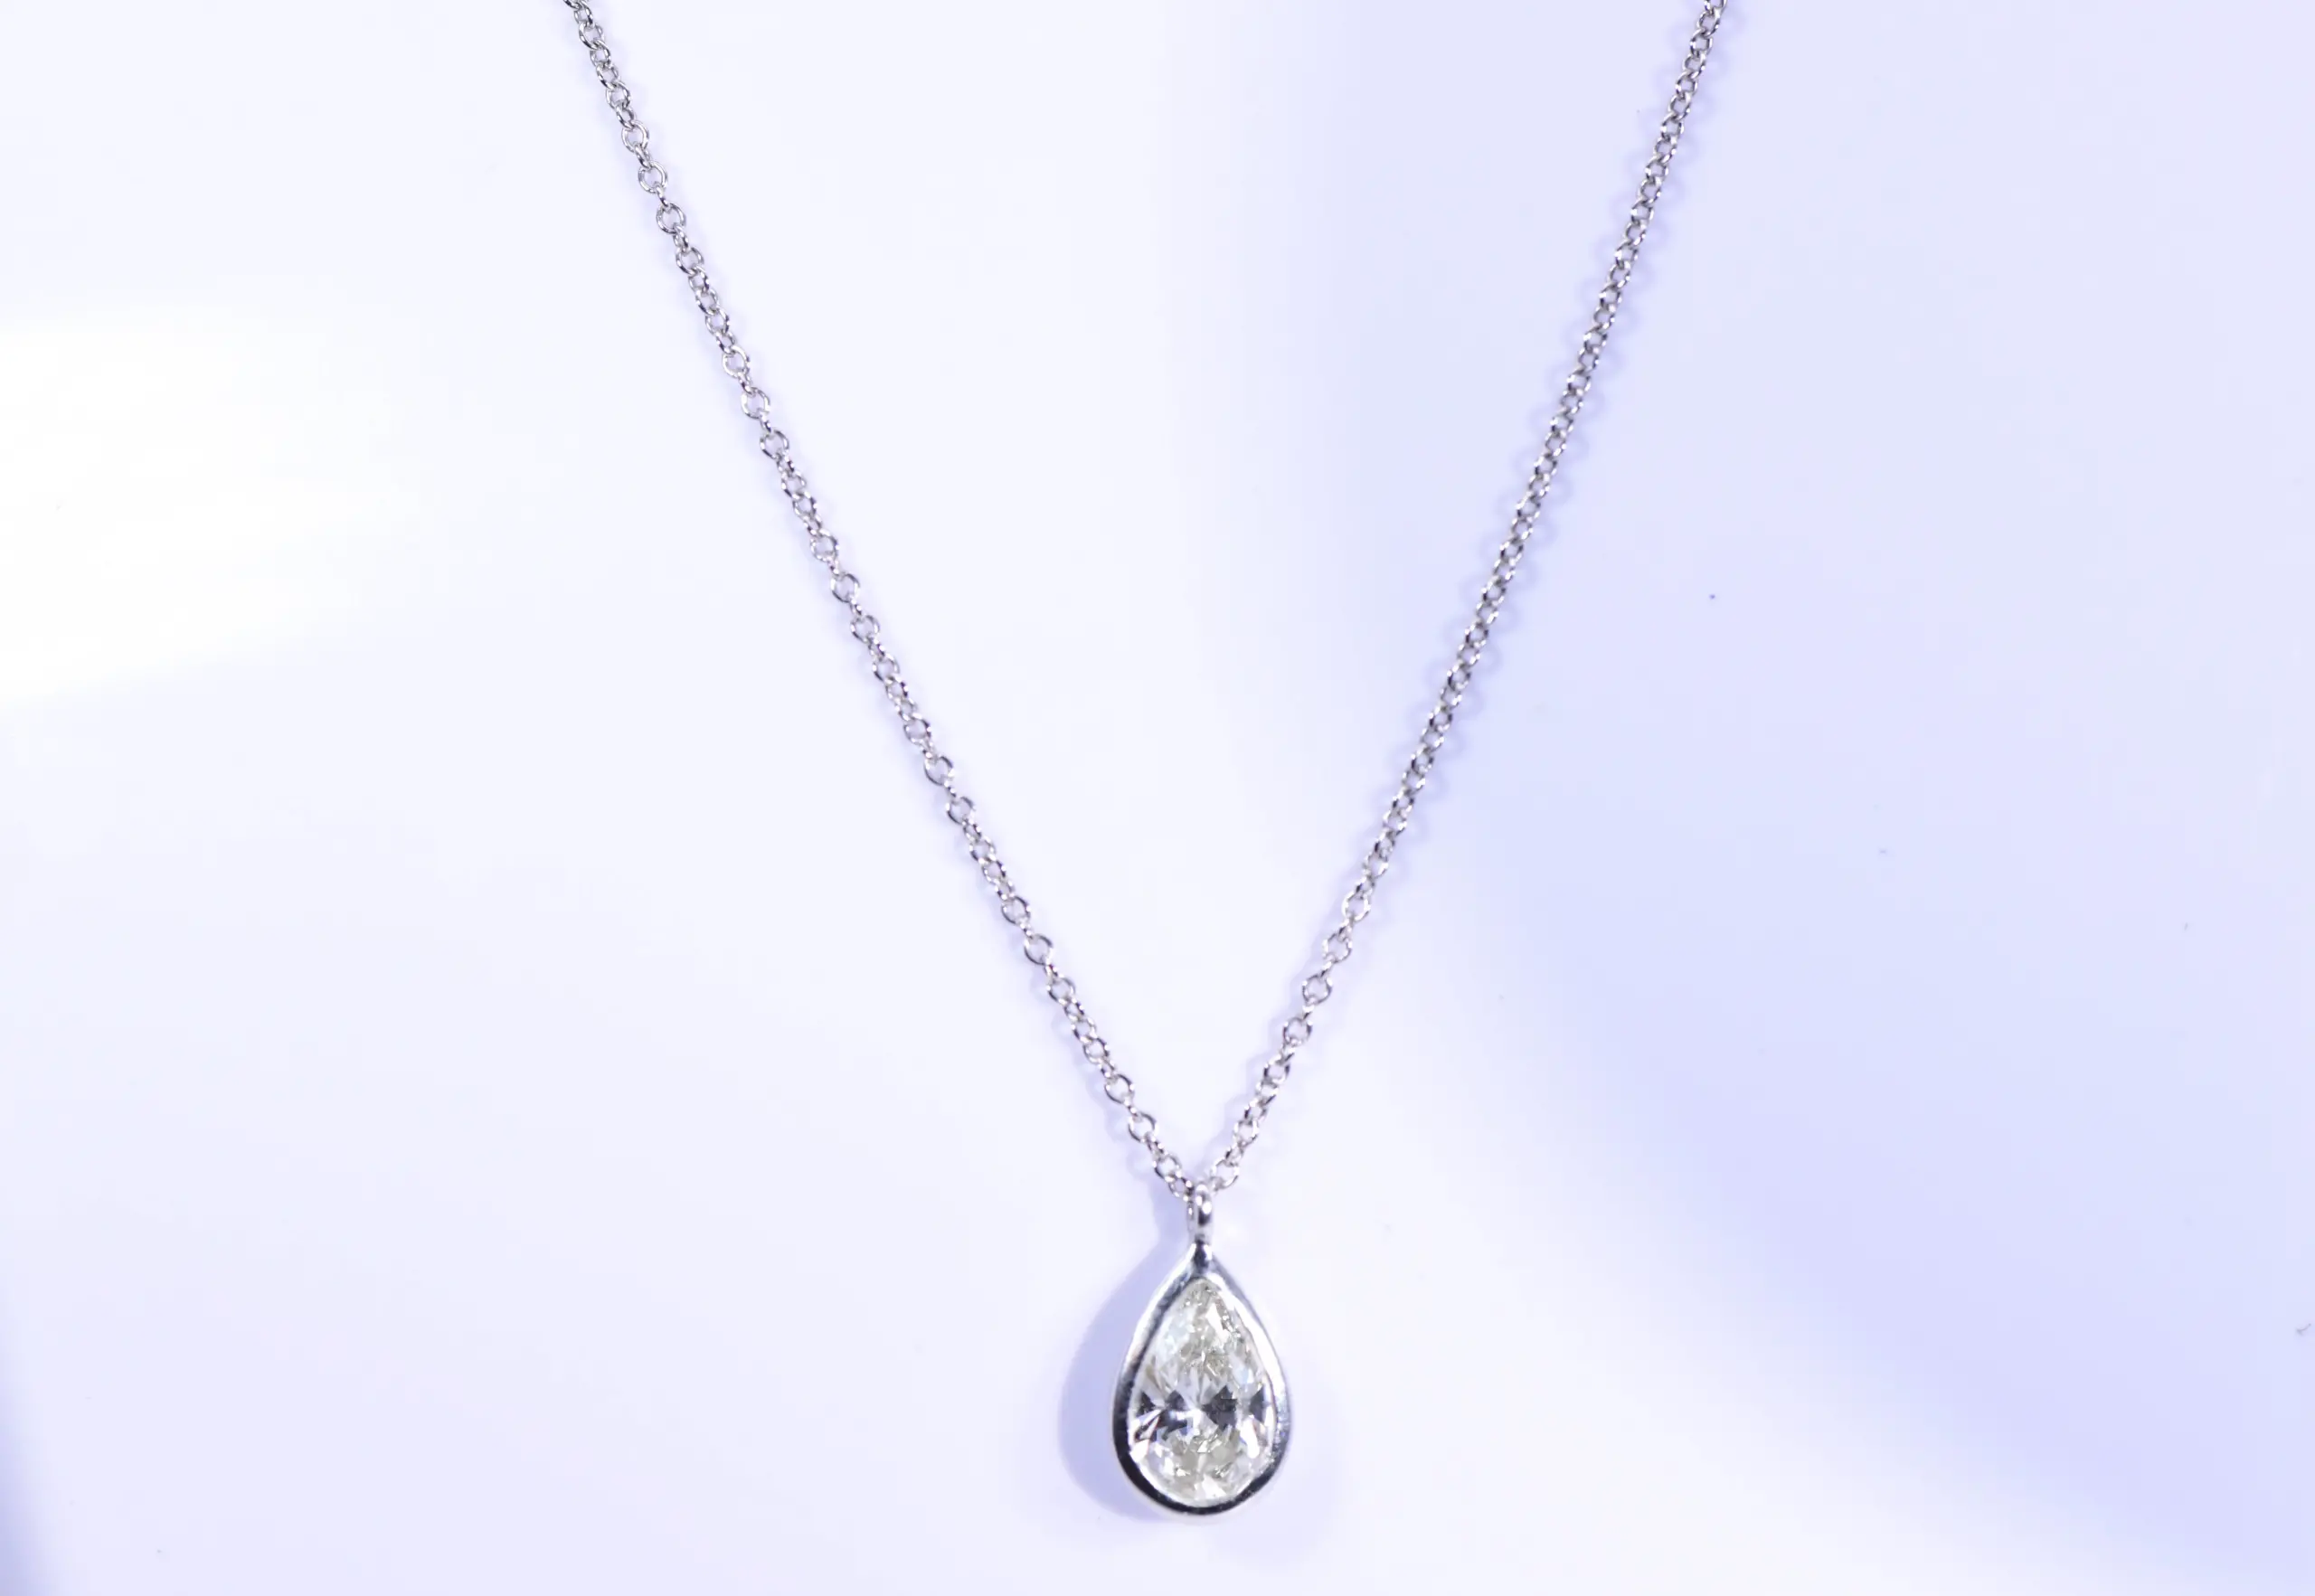 Tiffany & Co. 1 ct Solitaire Diamond Pendant Necklace Platinum